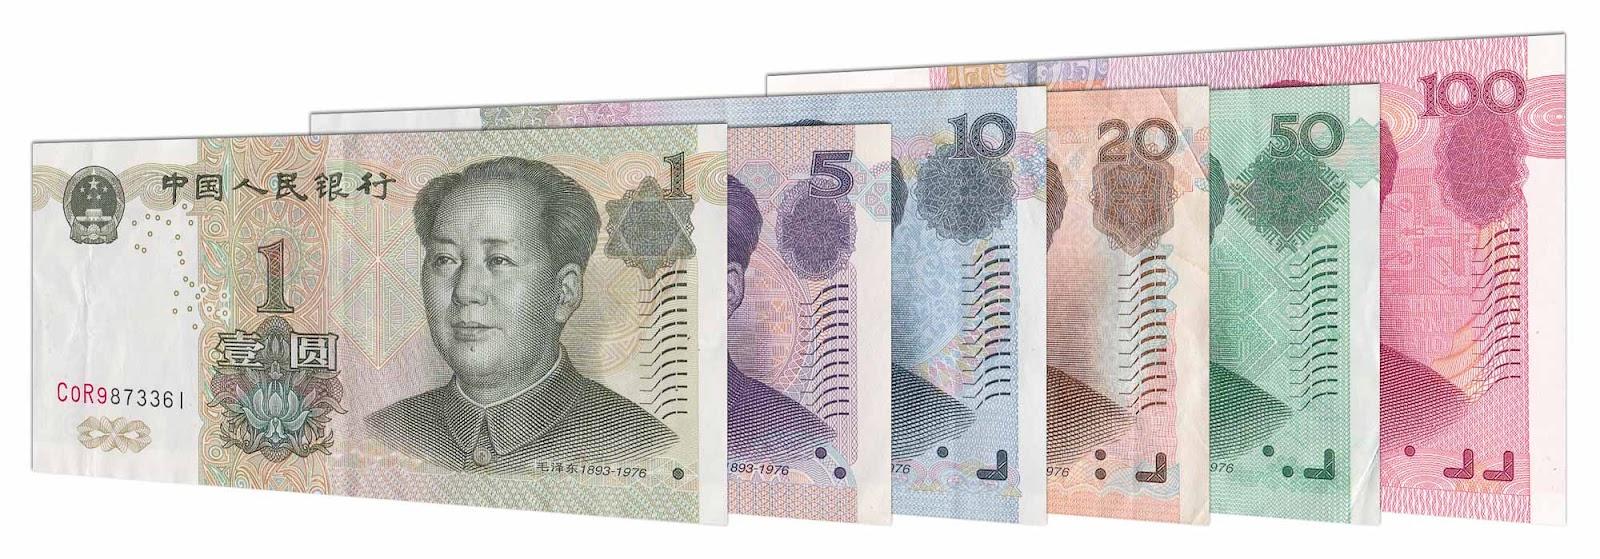 Chinese yuan banknote series